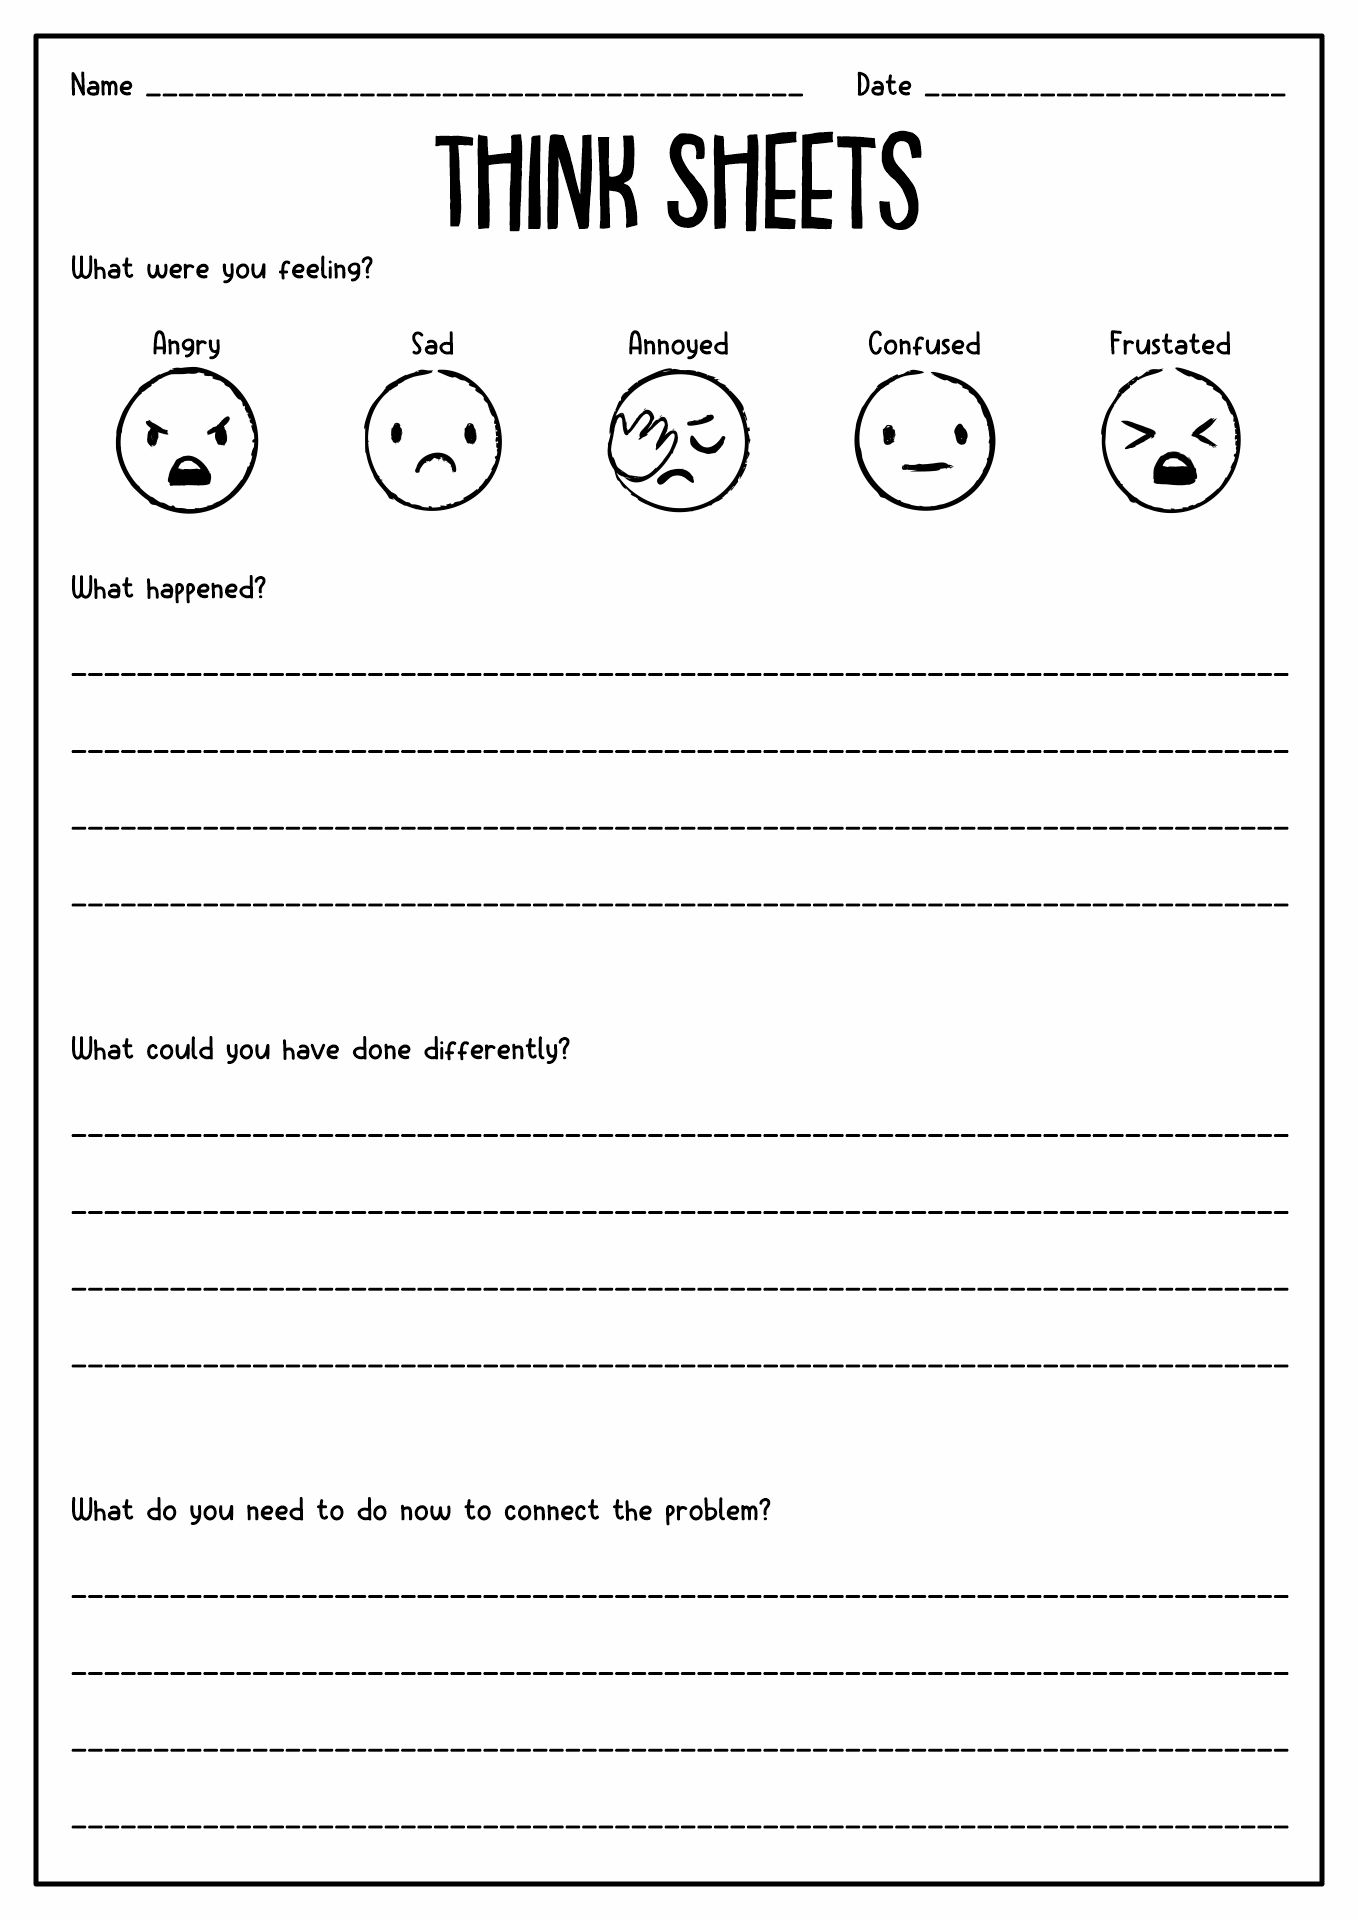 Student Behavior Think Sheet Image